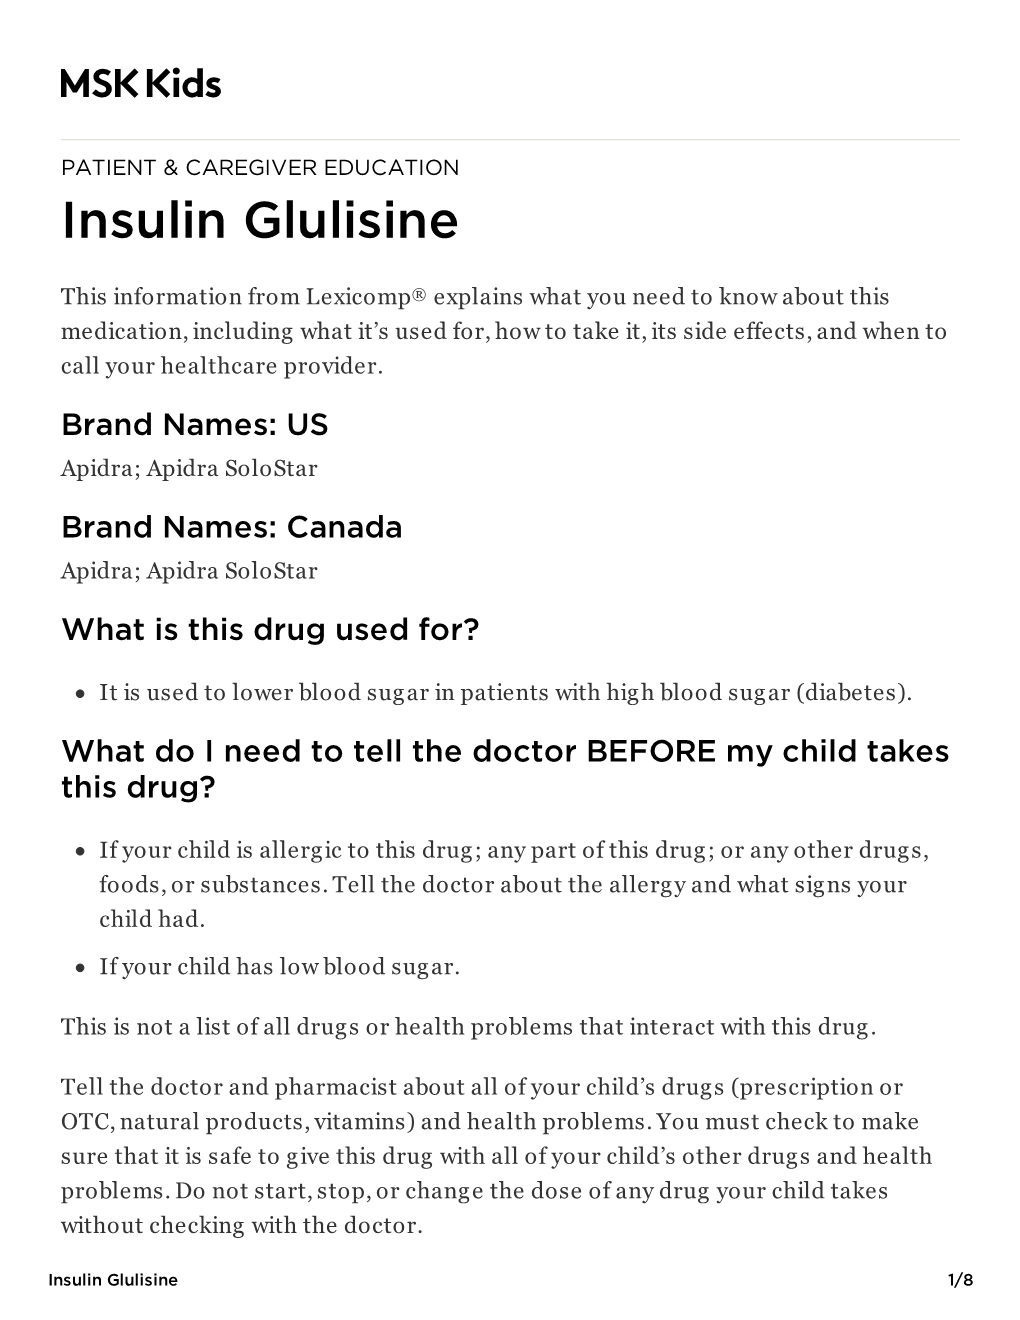 Insulin Glulisine: Pediatric Medication